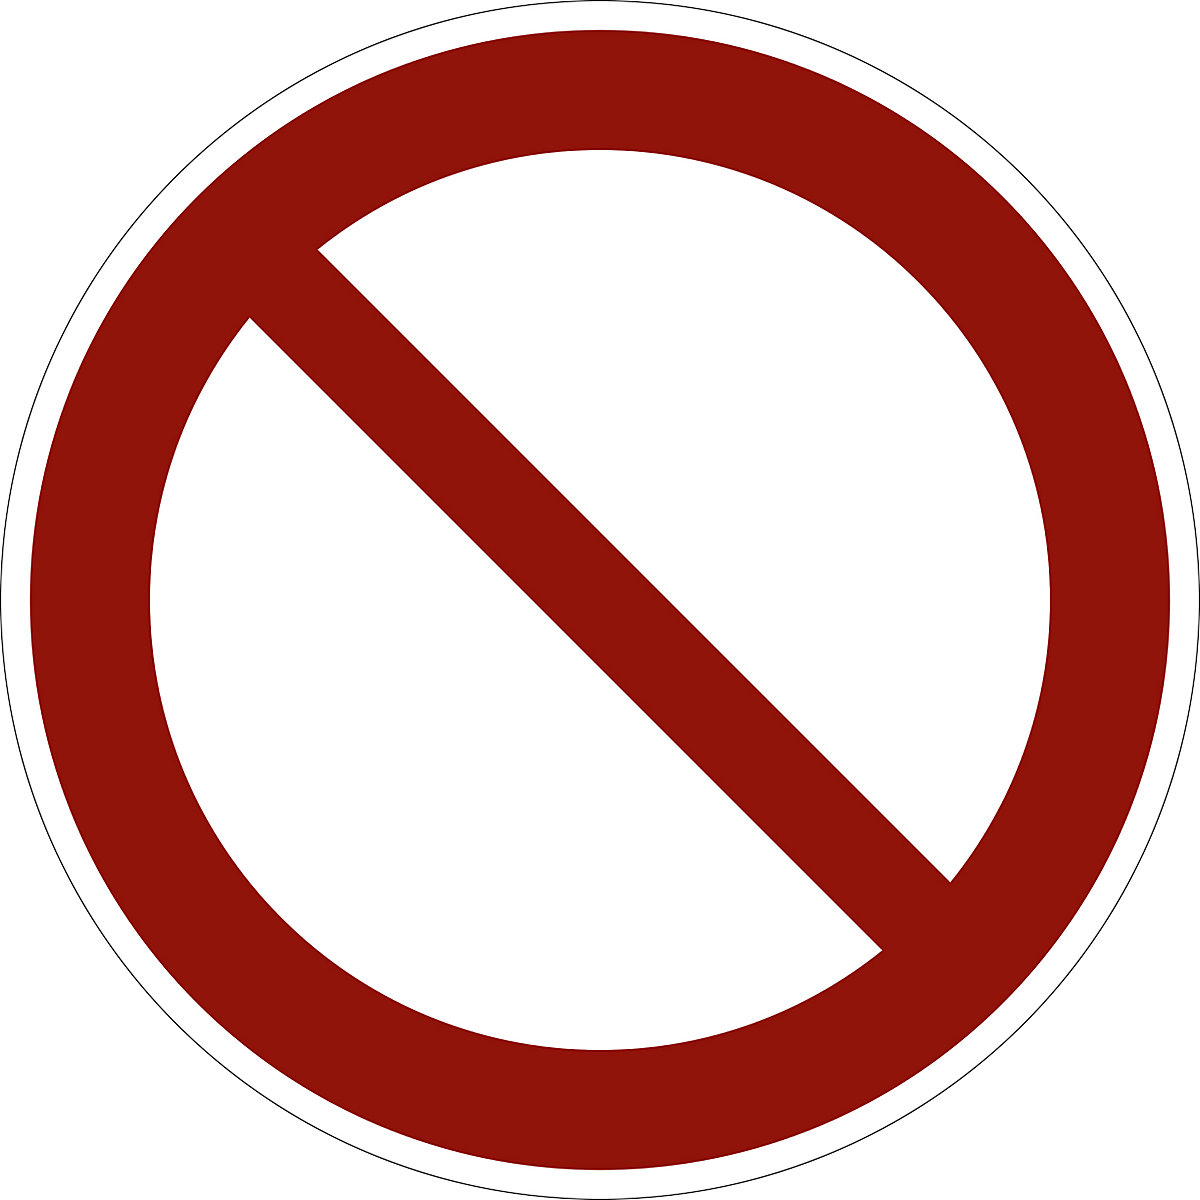 Prohibition sign